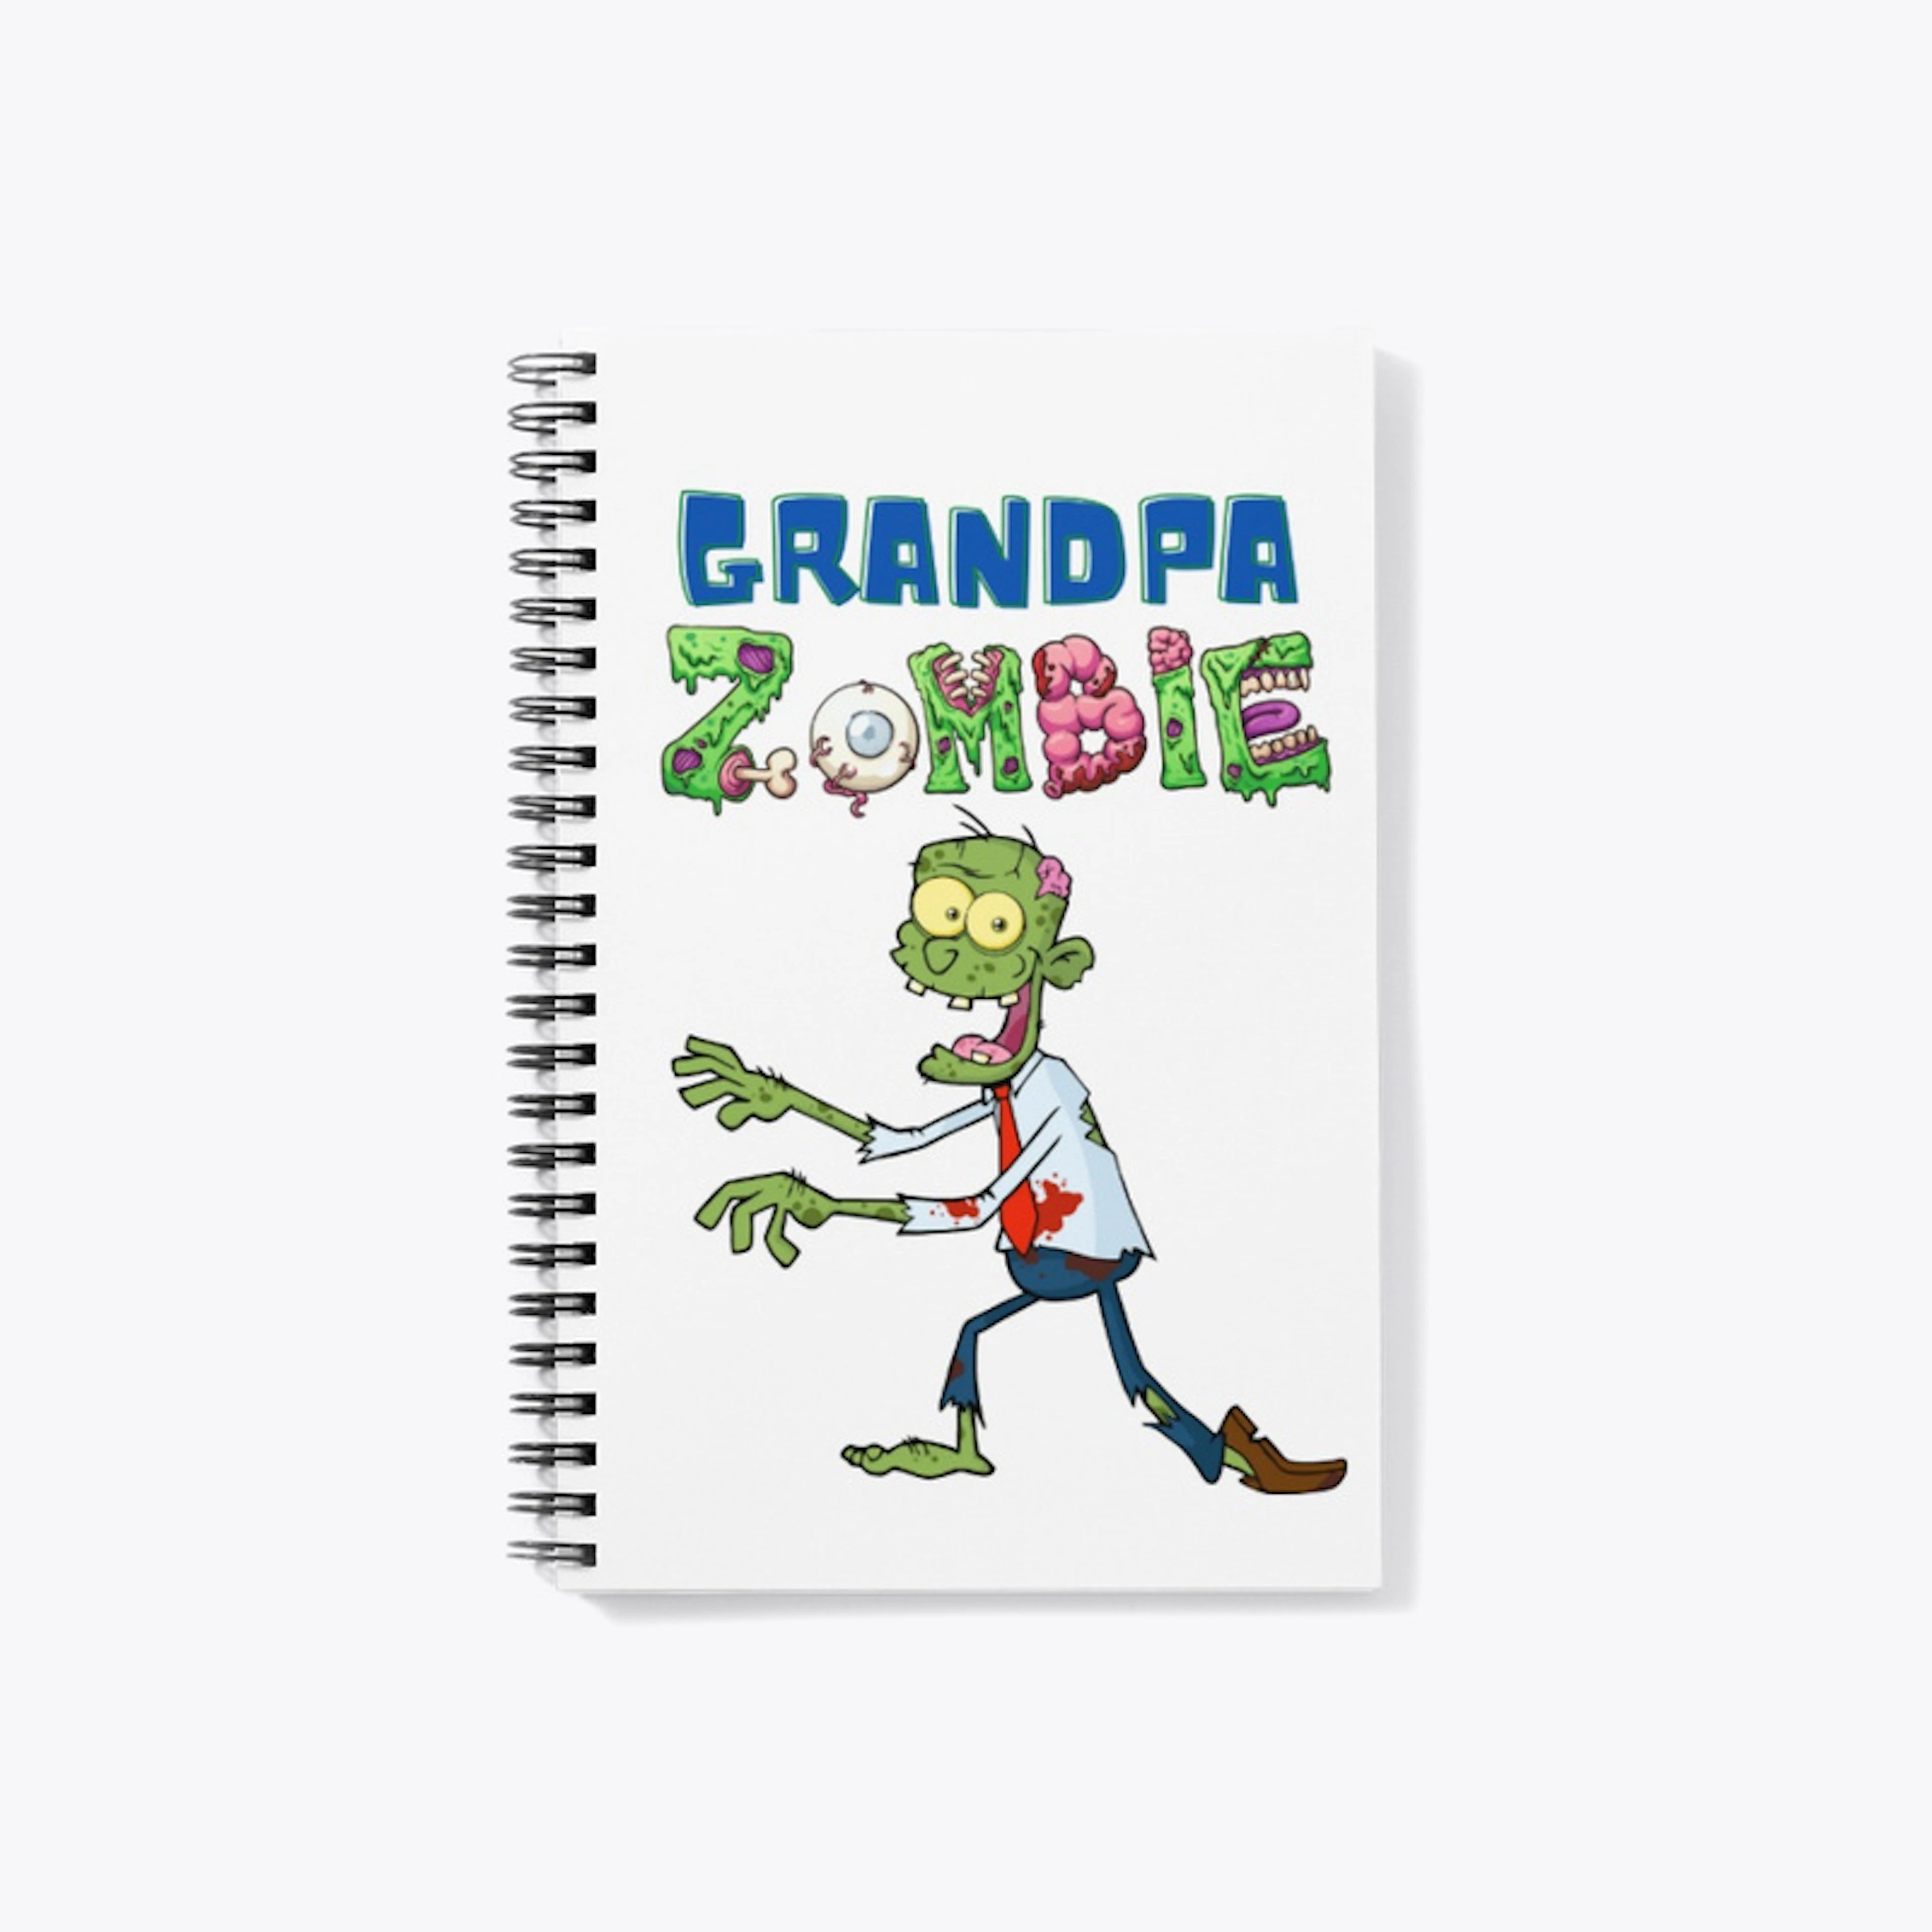 Grandpa Zombie